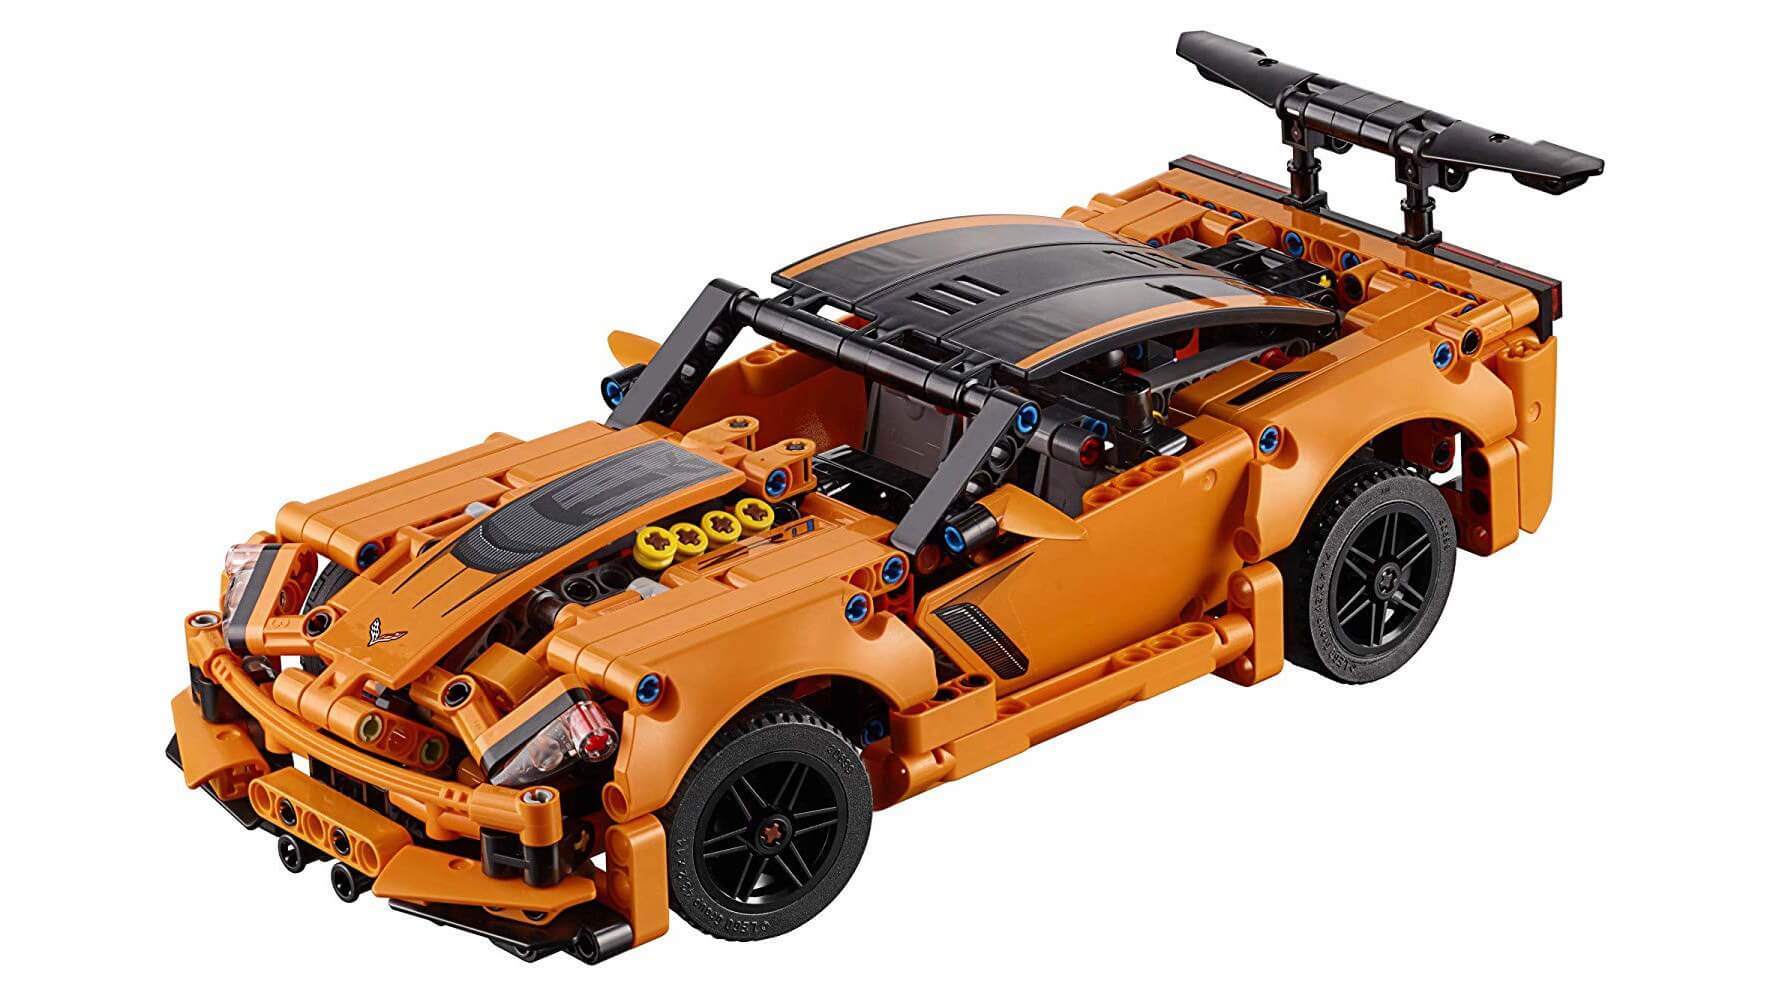 Lego's Chevrolet Corvette ZR1 kit turns into a classic hot rod